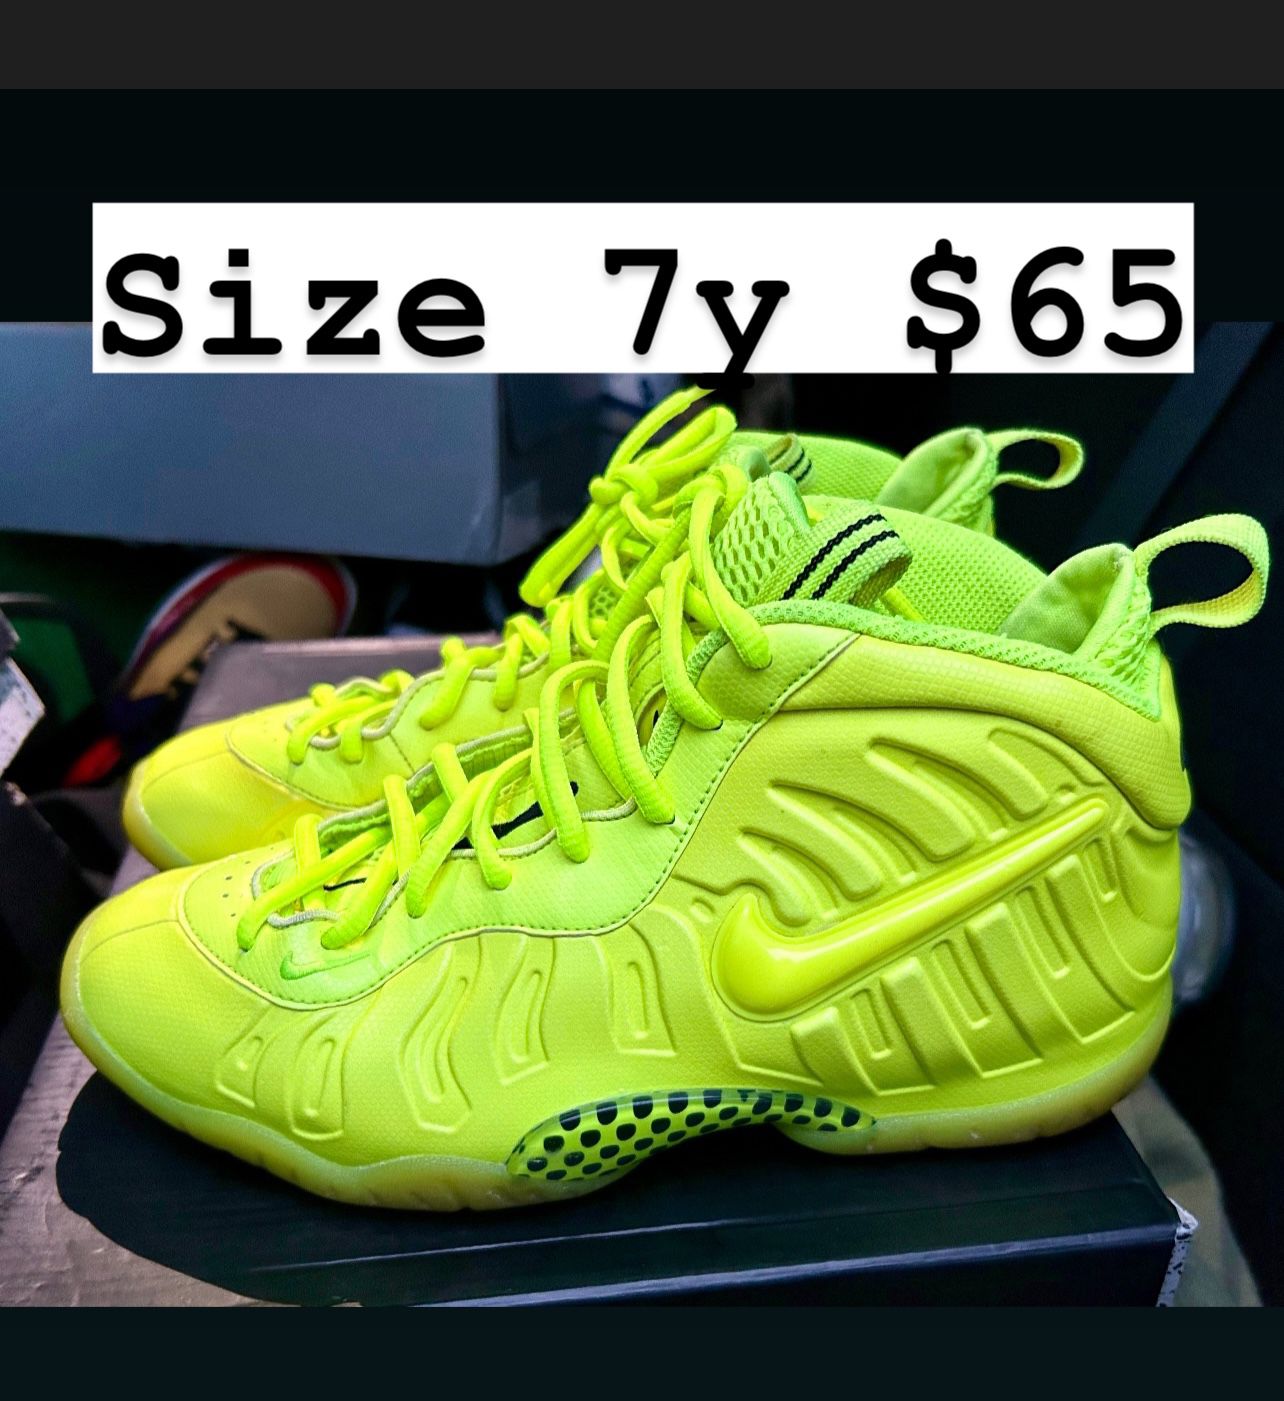 Nike Foams Electric Yellow Size 7y